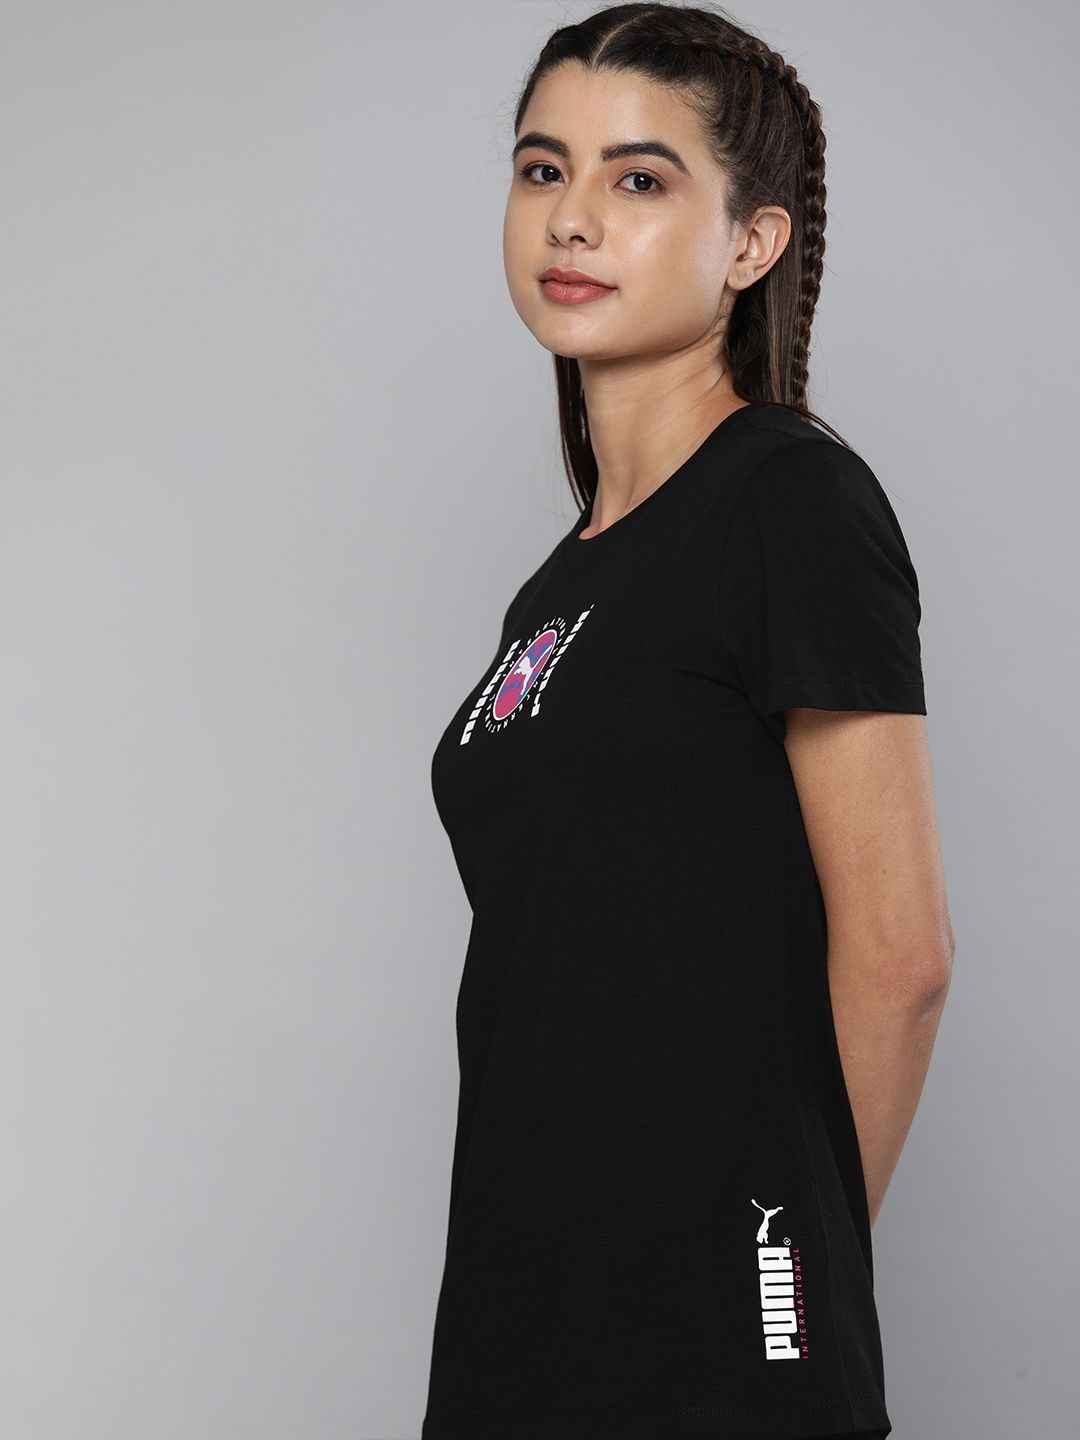 Puma Women Black & White Printed T-shirt Price in India